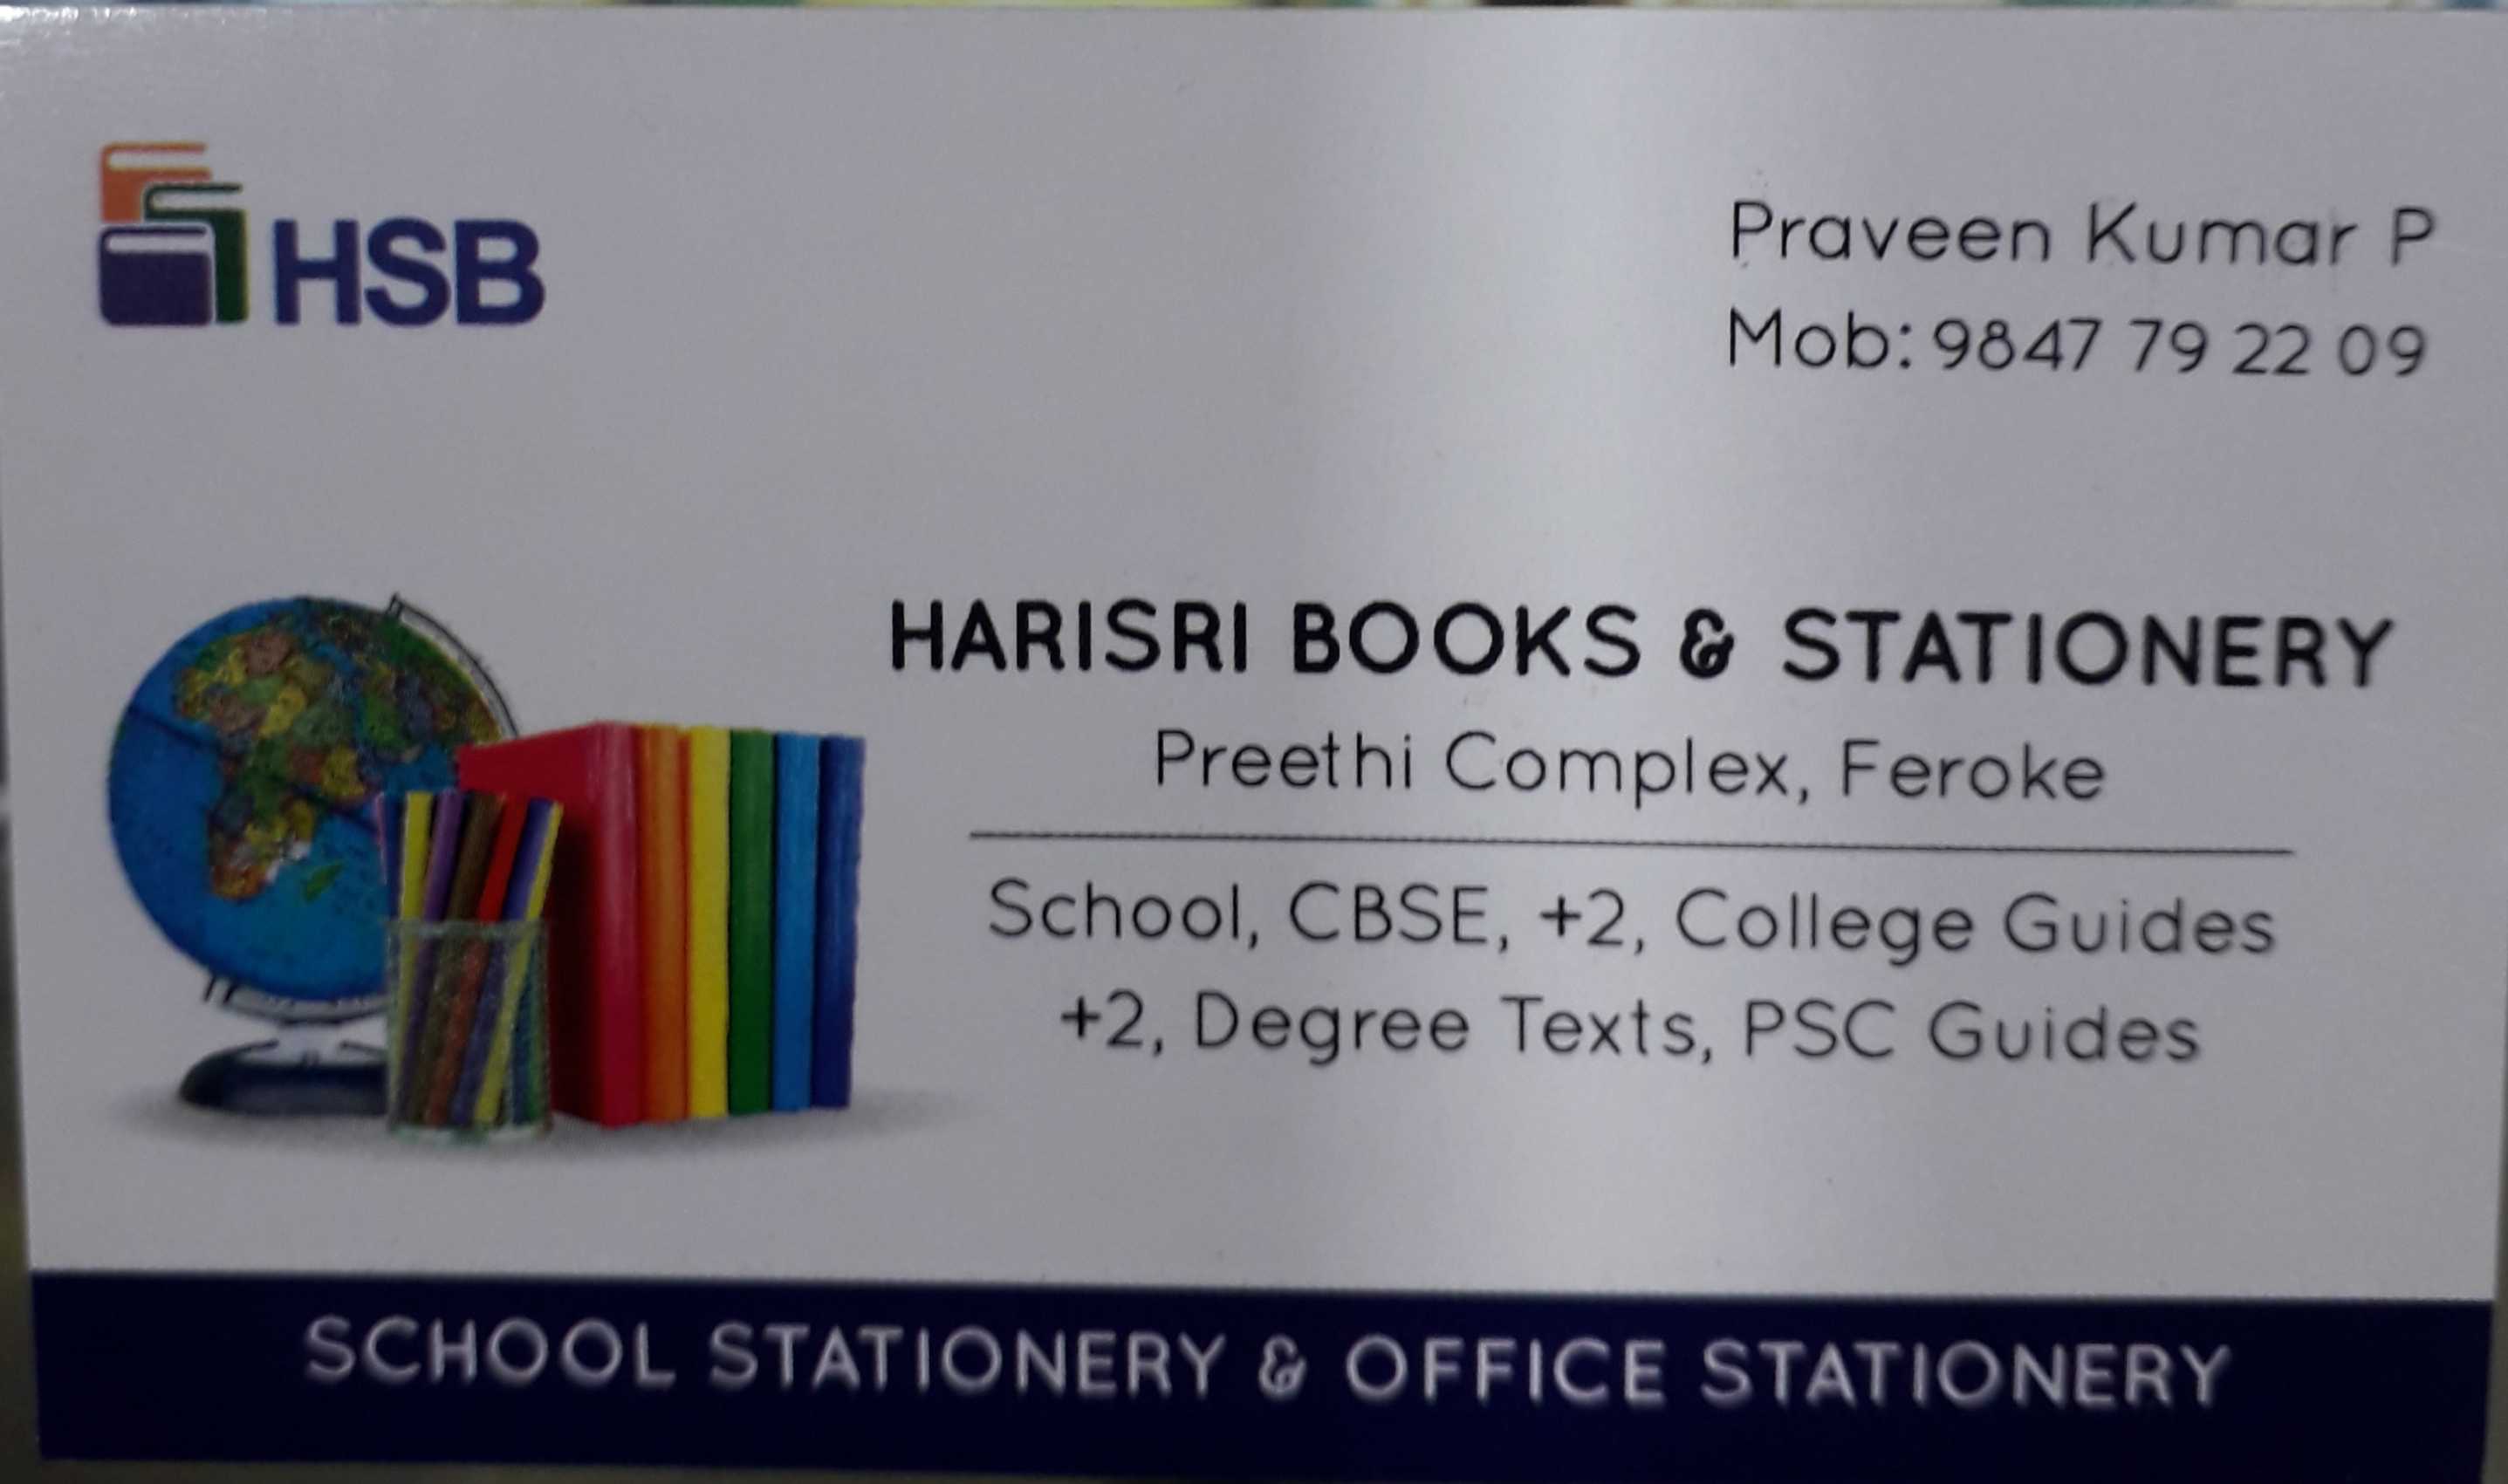 HARISRI BOOKS & STATIONERY, STATIONARY,  service in Farook, Kozhikode